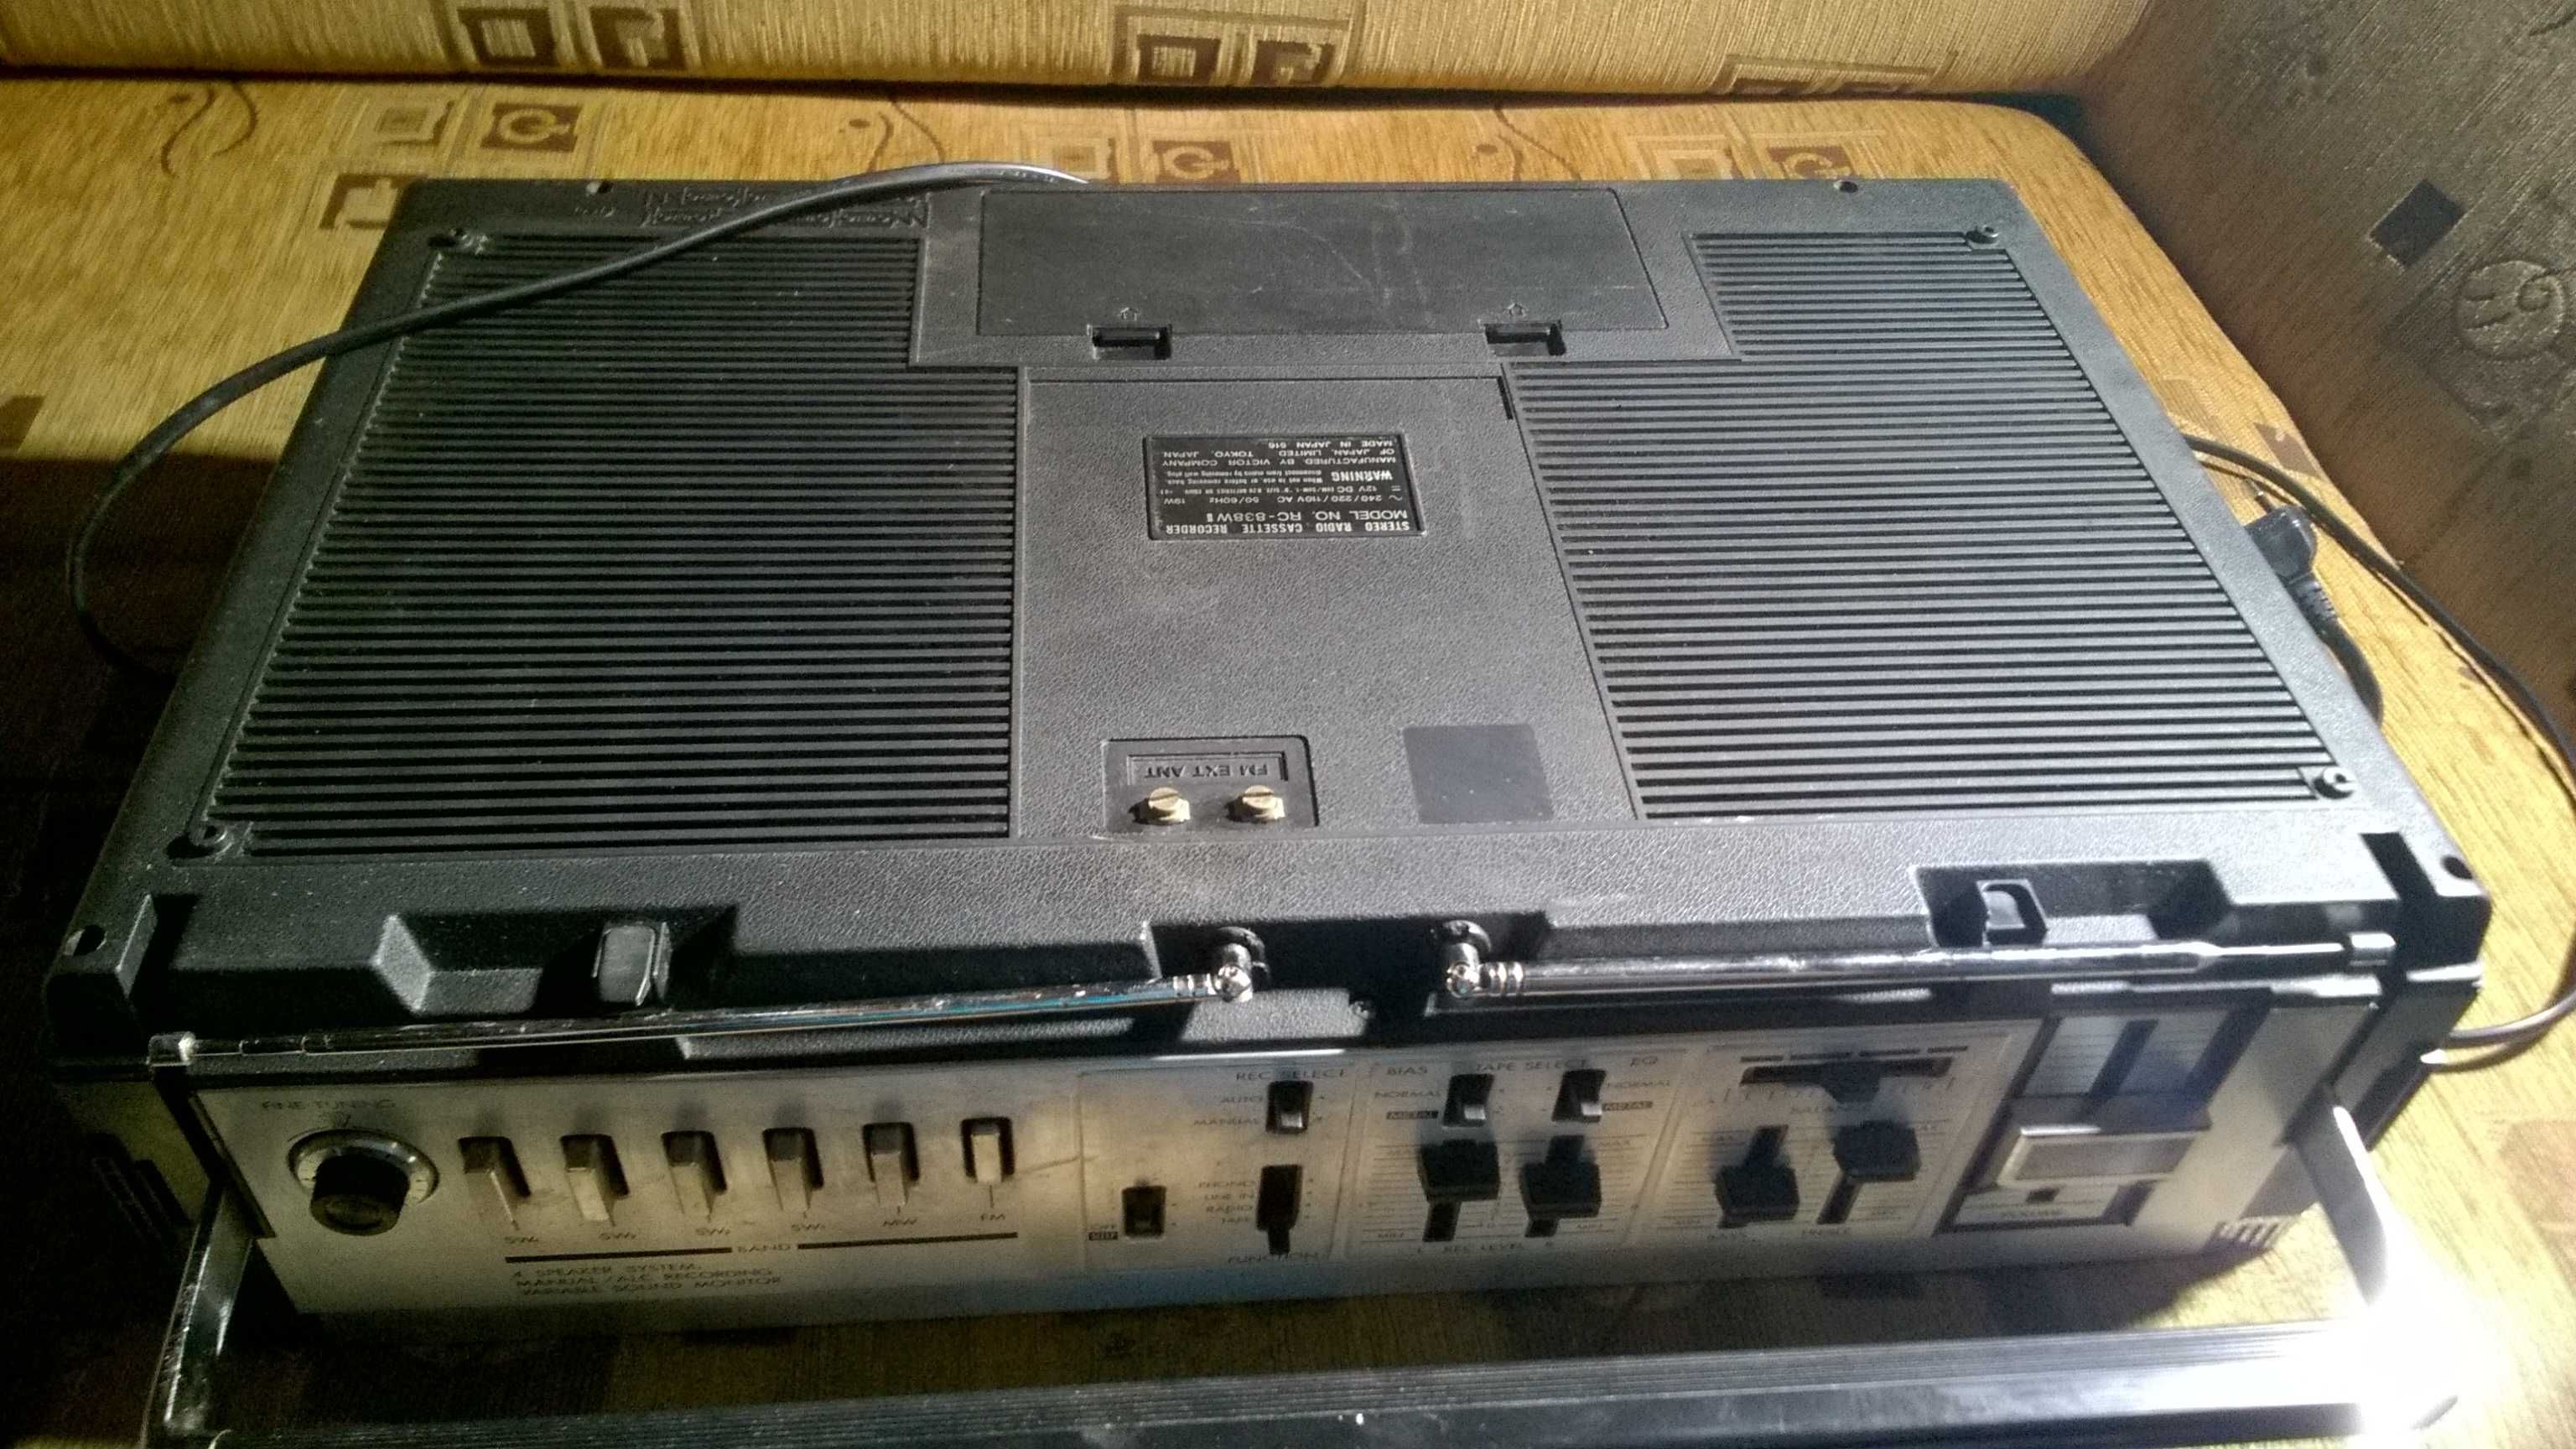 Radiomagnetofon Vintage JVC  RC-838W